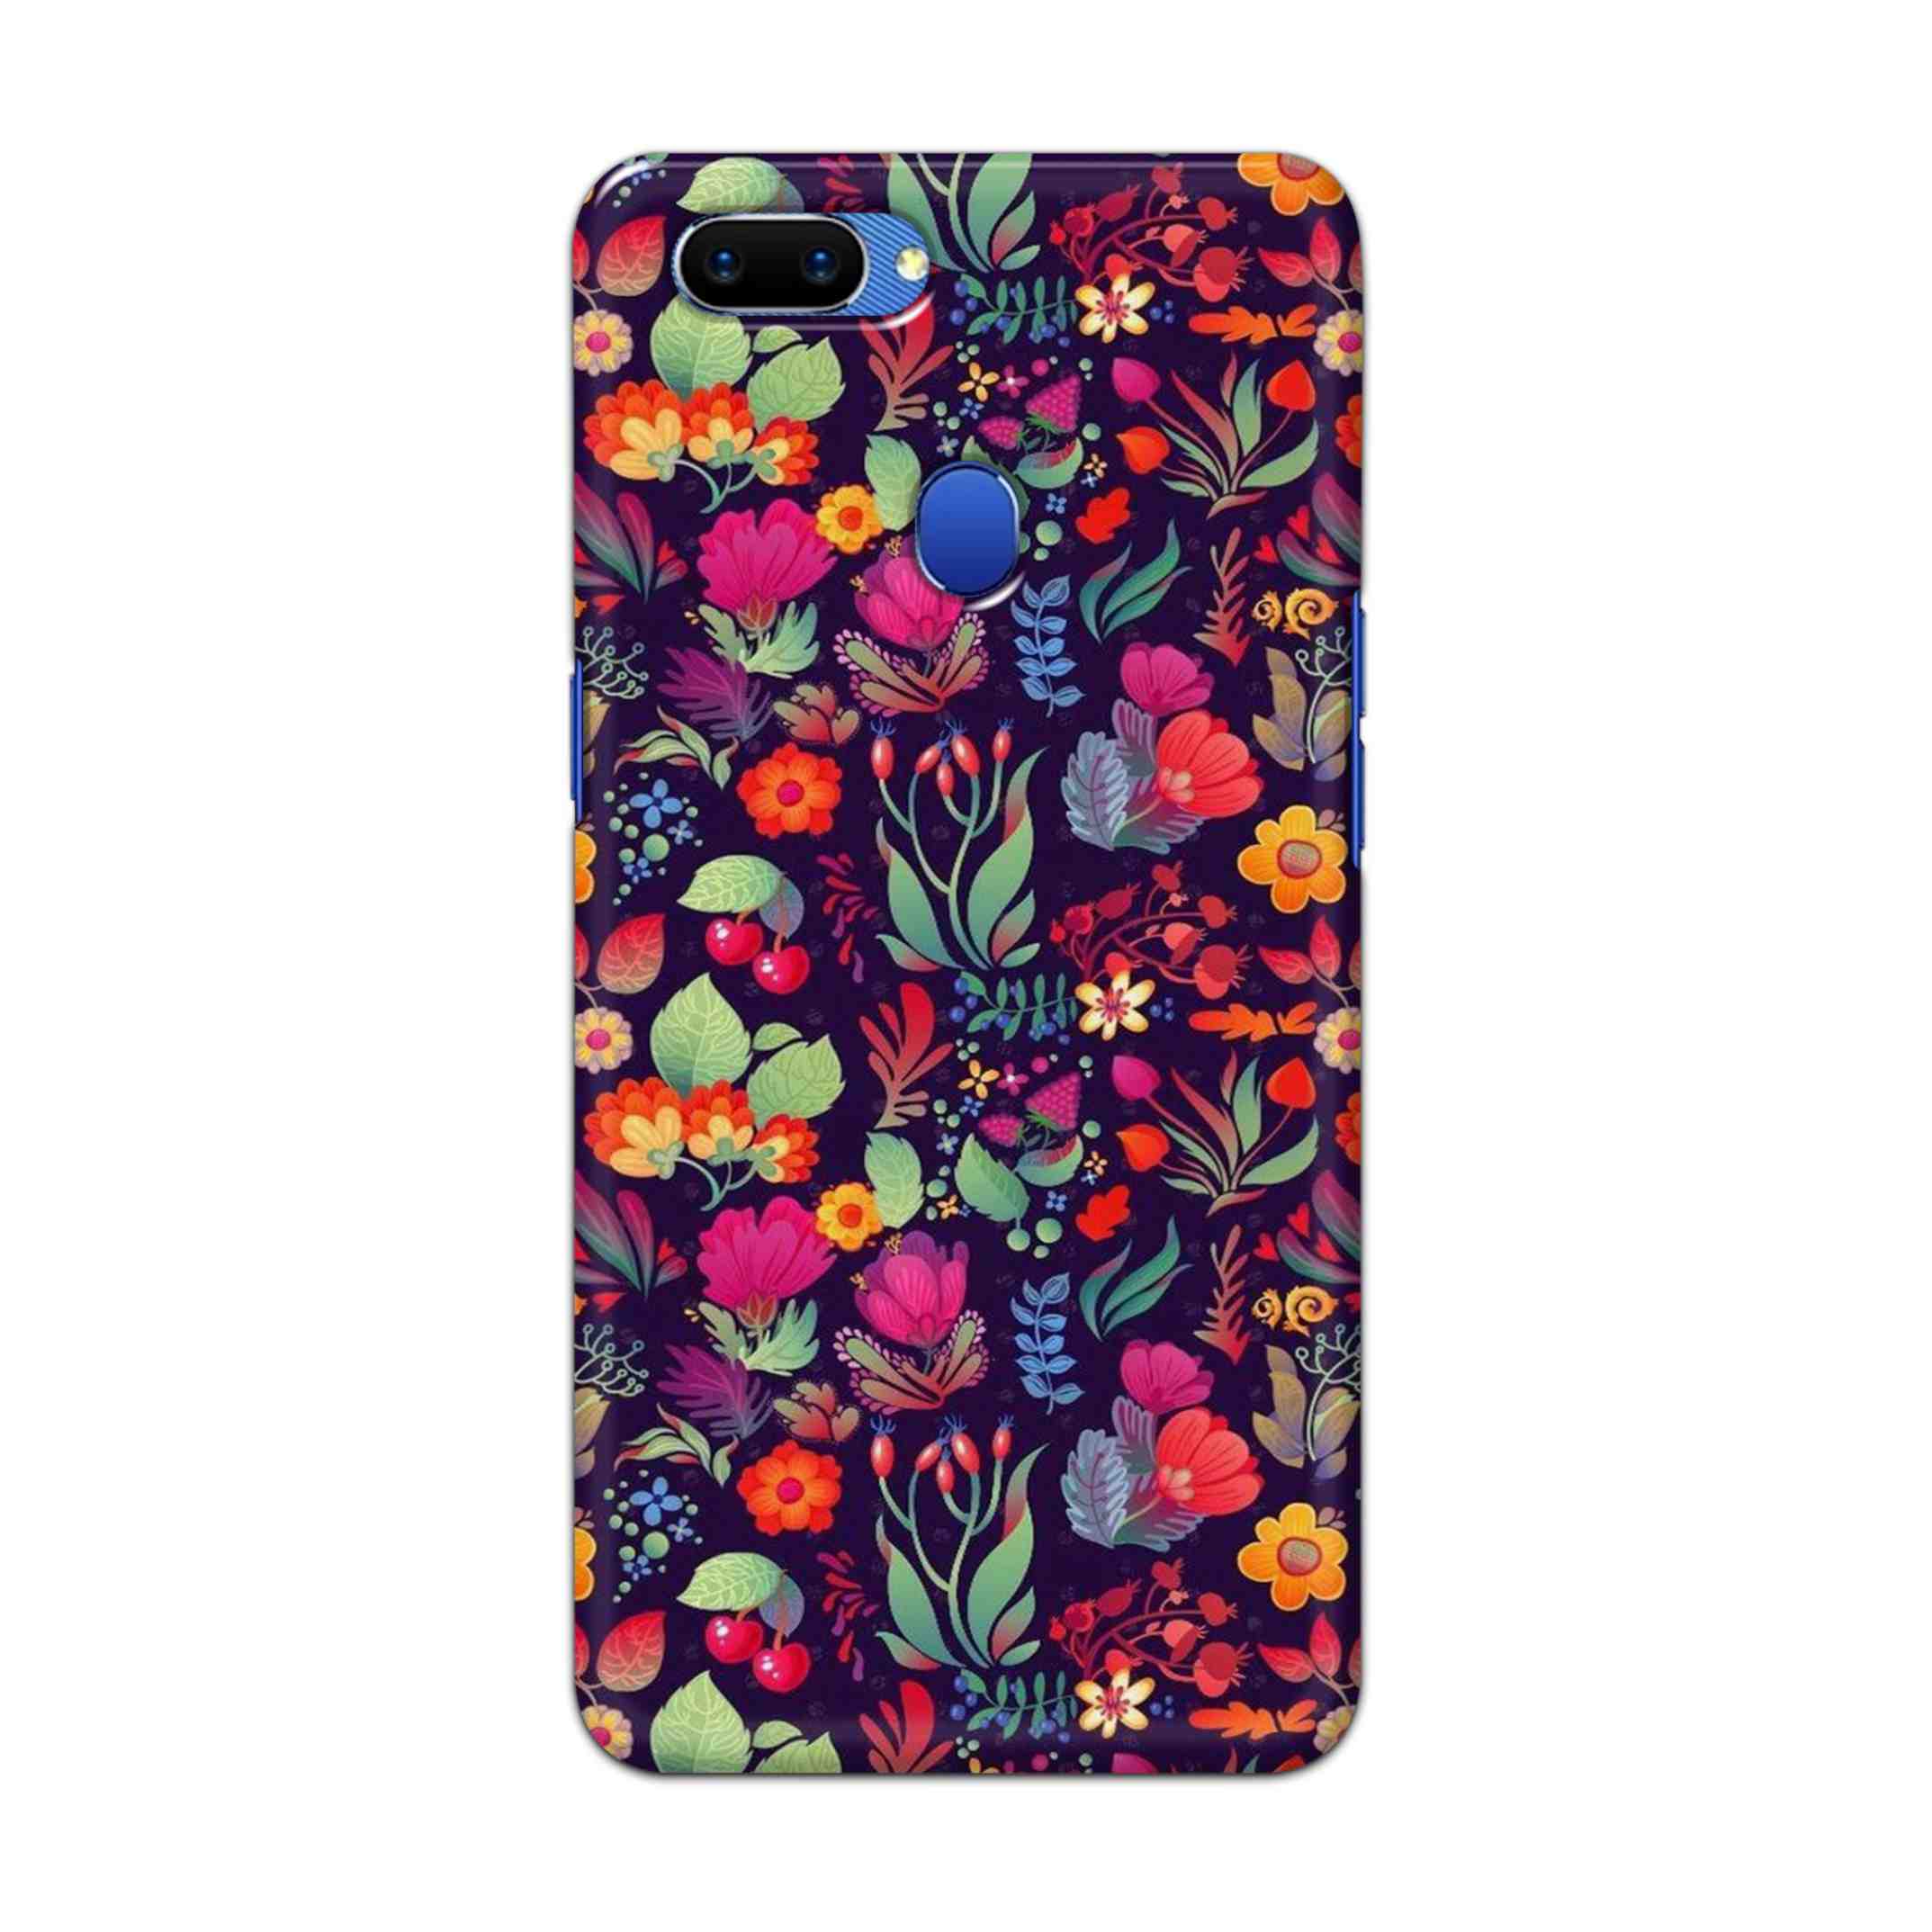 Buy Fruits Flower Hard Back Mobile Phone Case Cover For Oppo A5 Online